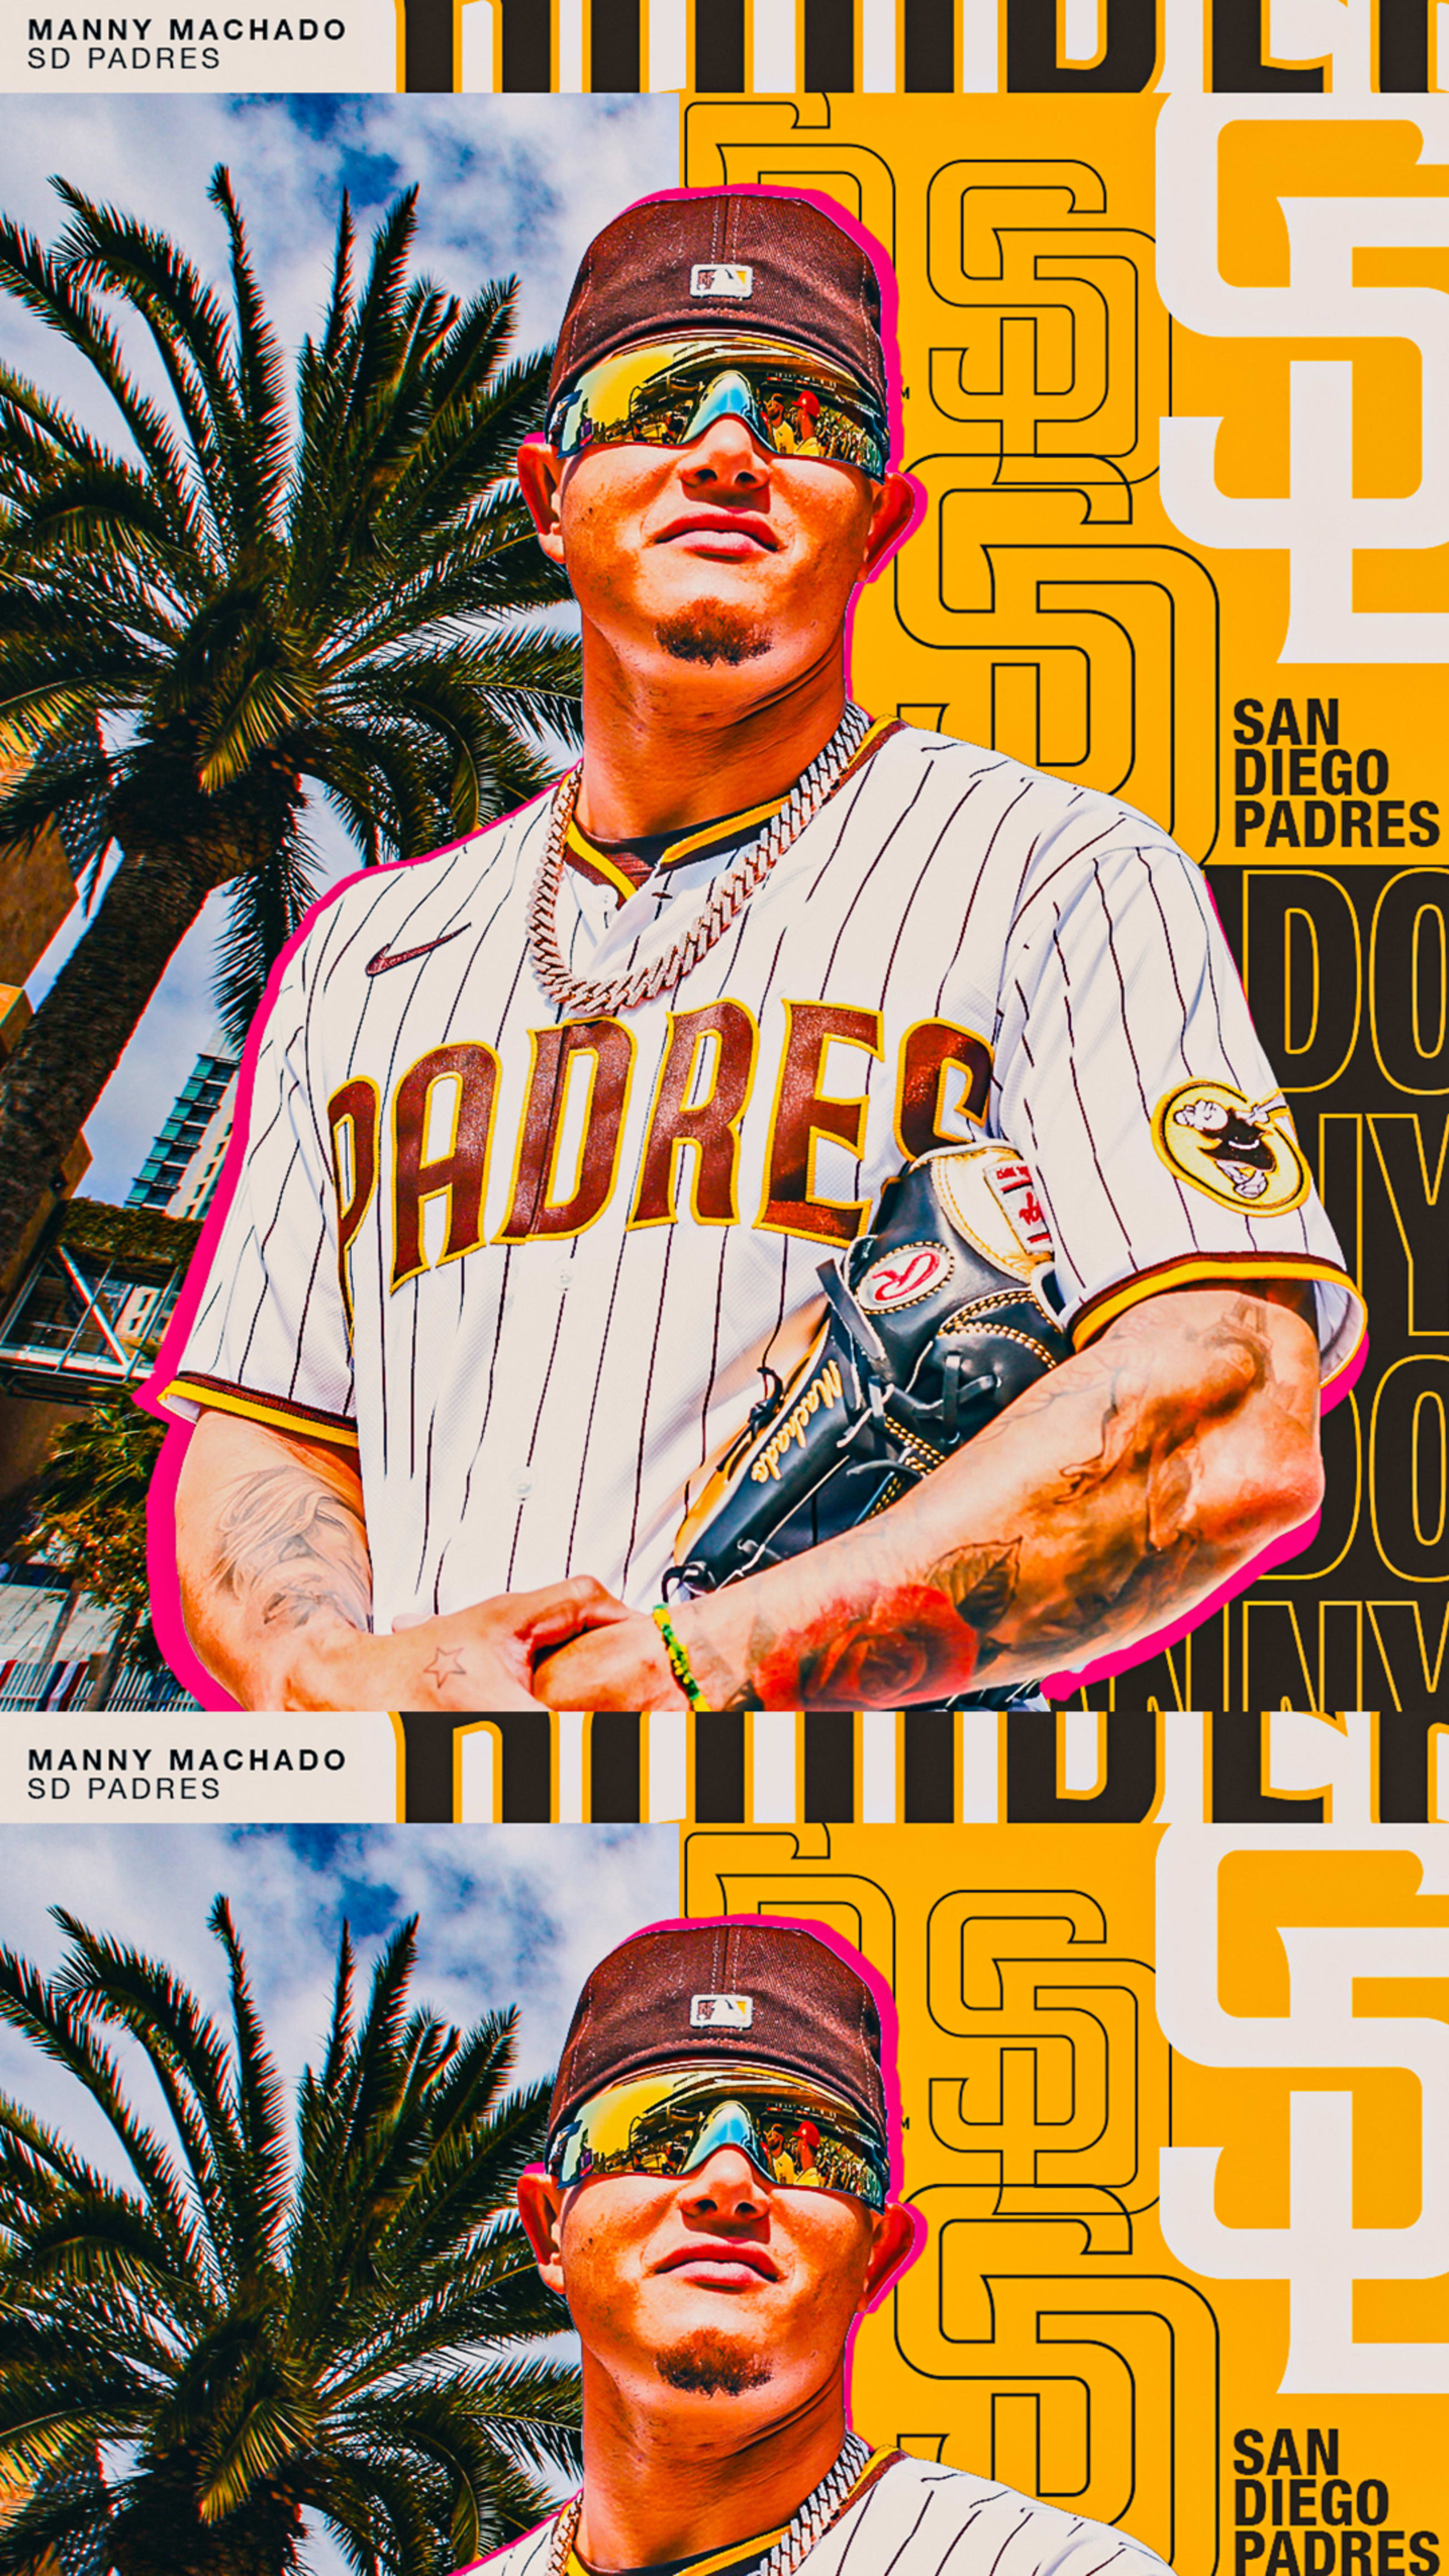 MLB Stories - Wallpaper Wednesday Part 2